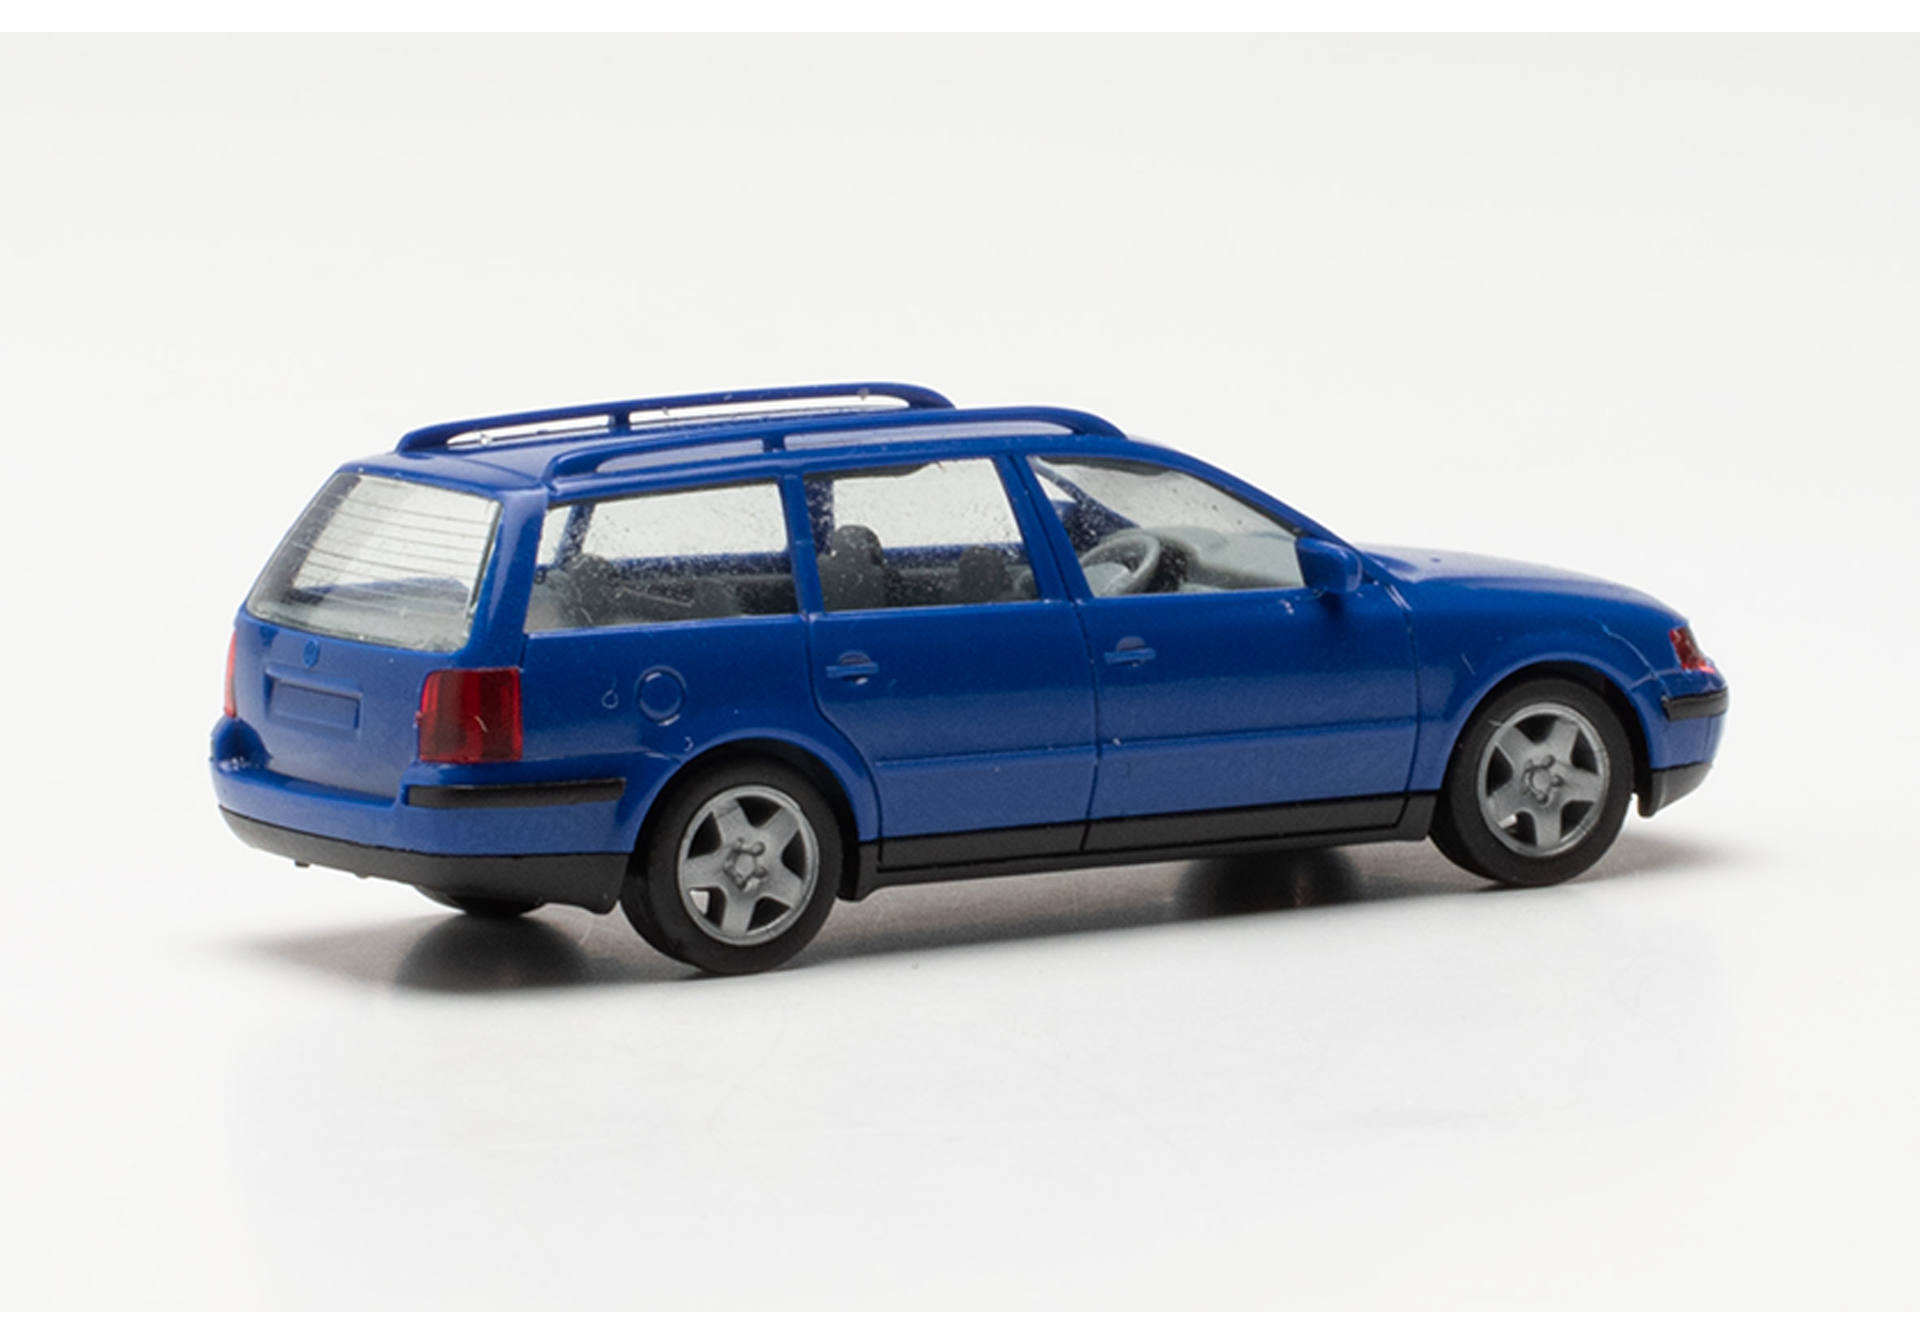 Herpa Minikit: Volkswagen (VW) Passat Variant, ultramarine blue